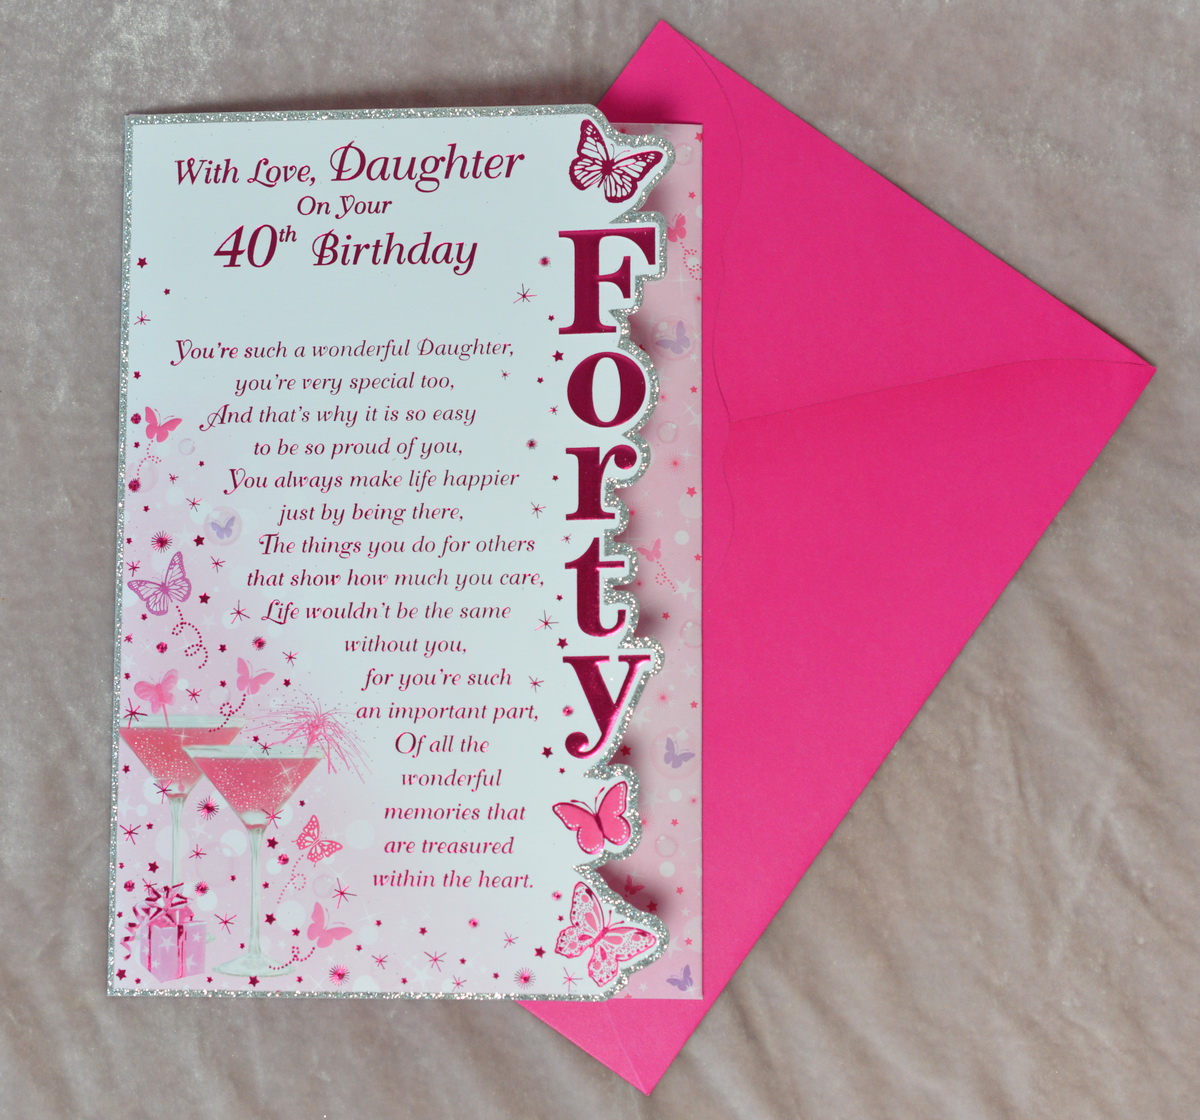 Handmade Greeting Cards Blog: Birthday Cards For Women ...